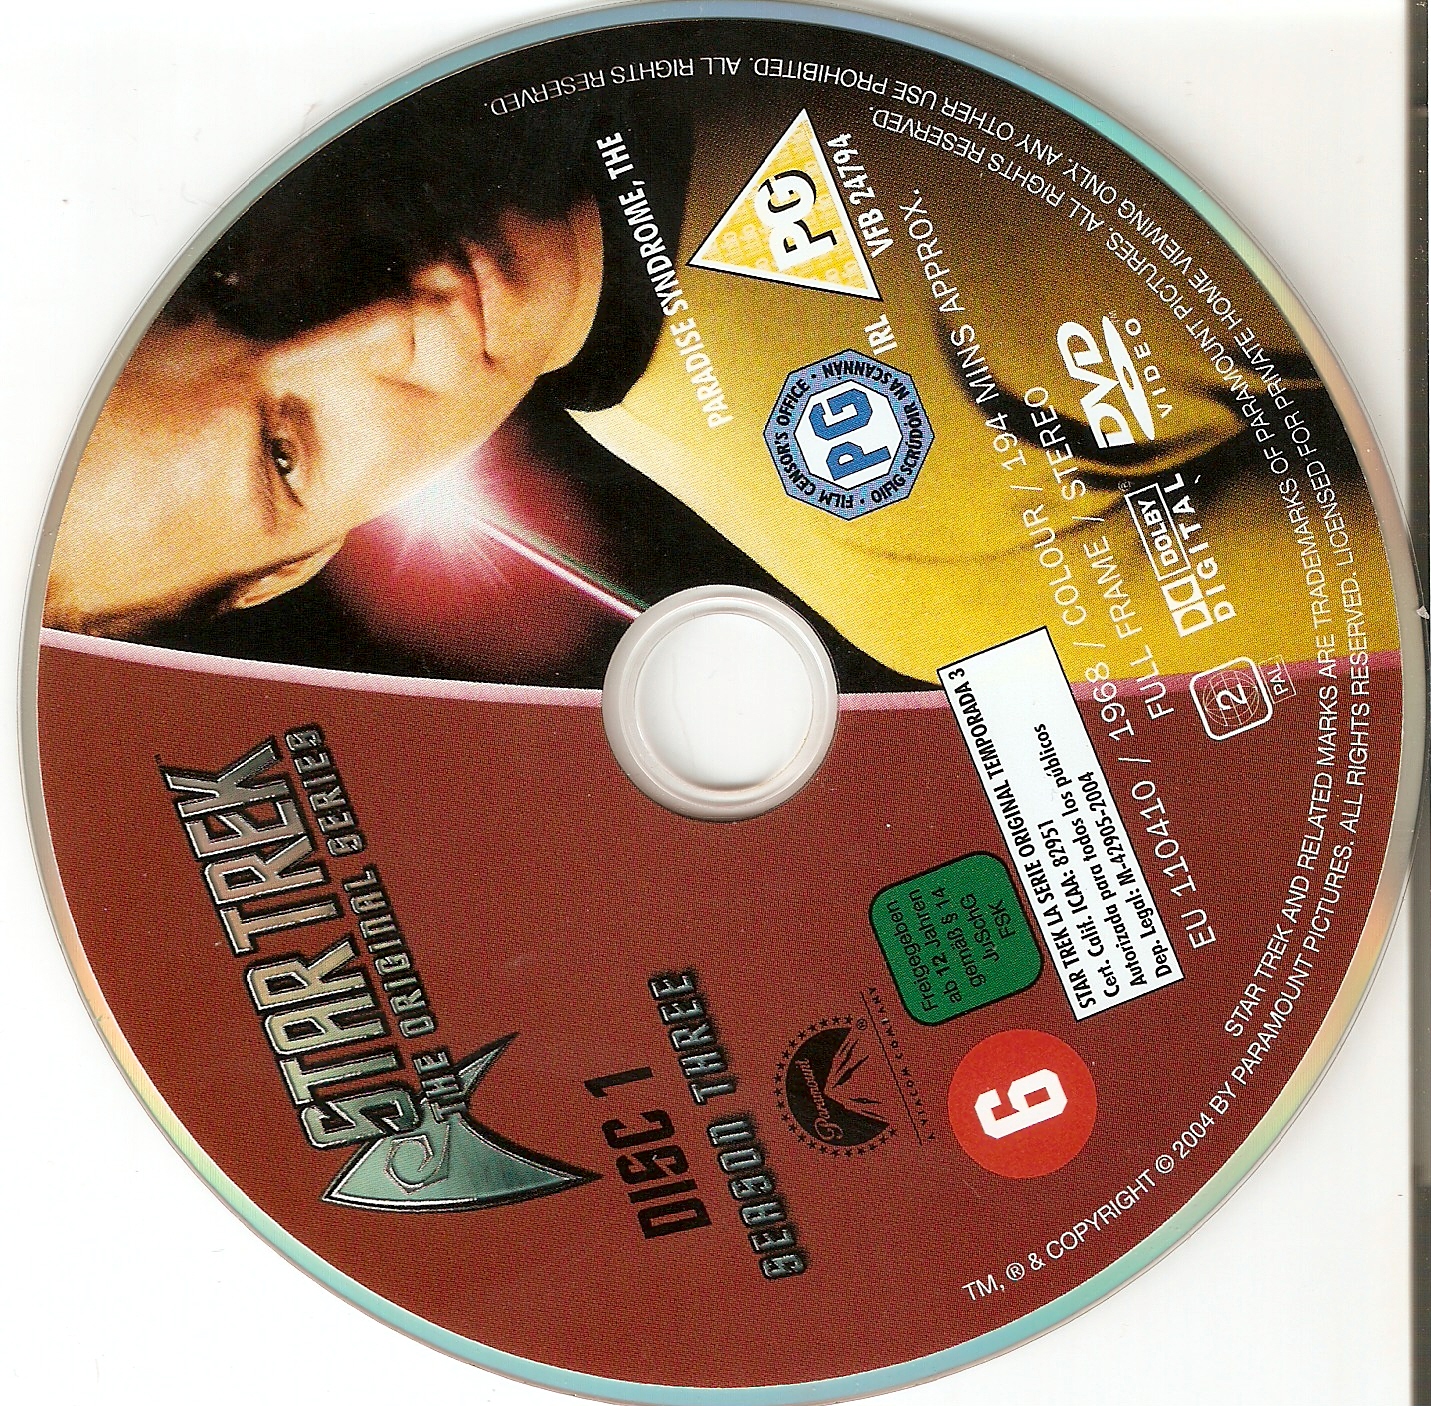 Star trek saison 3 DVD 1